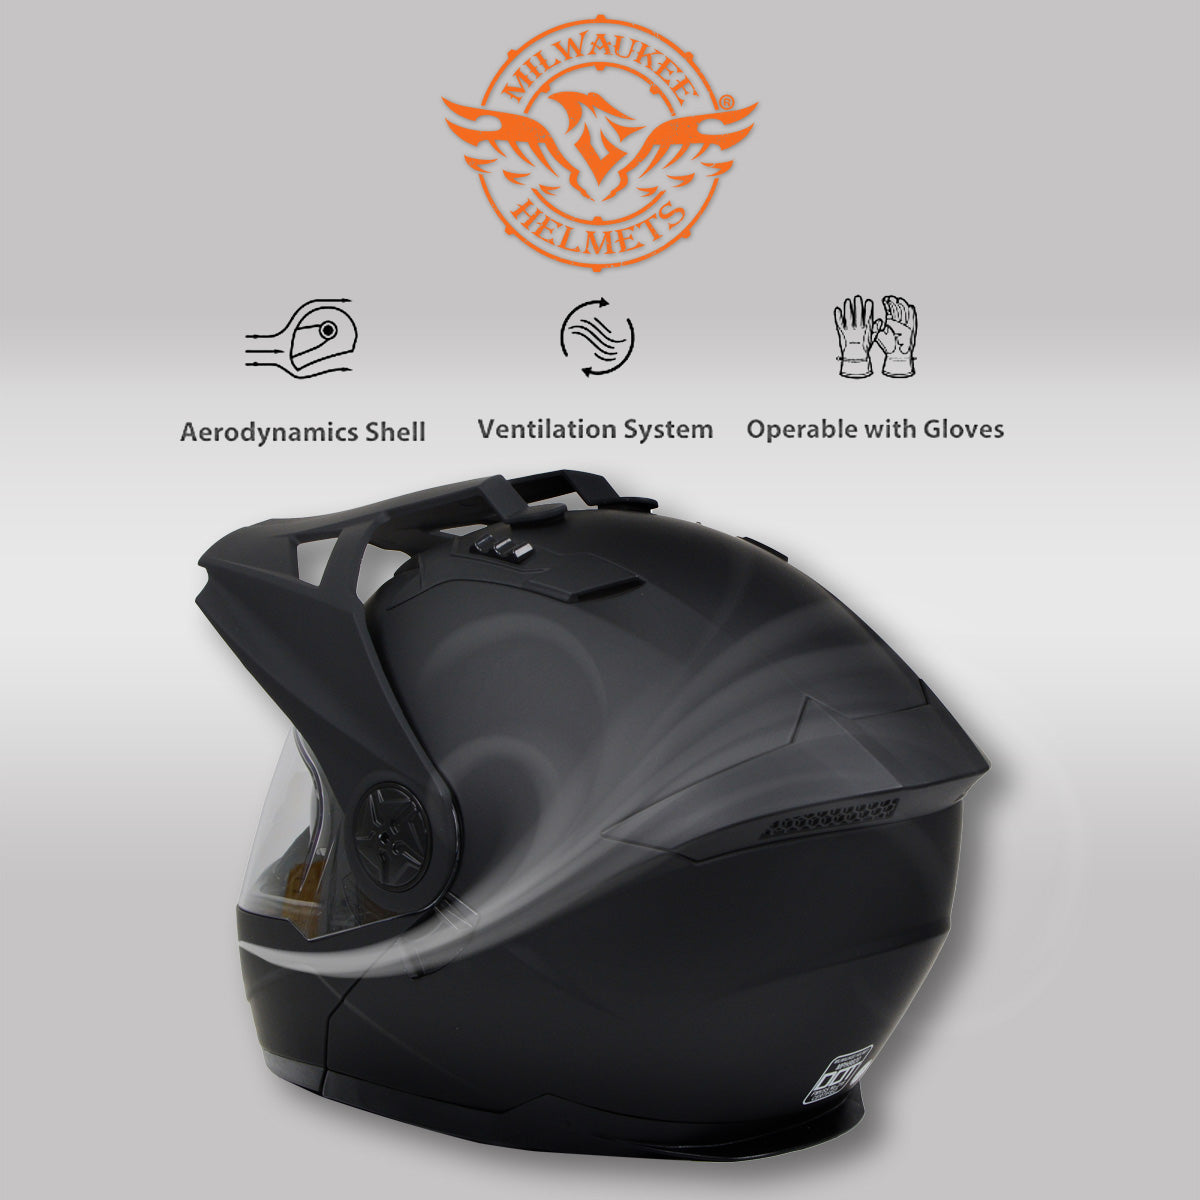 Milwaukee Helmets MPH9820DOT Flat Black 'Ominous' Dual Sport Advanced Motorcycle Modular Helmet for Men and Women Biker